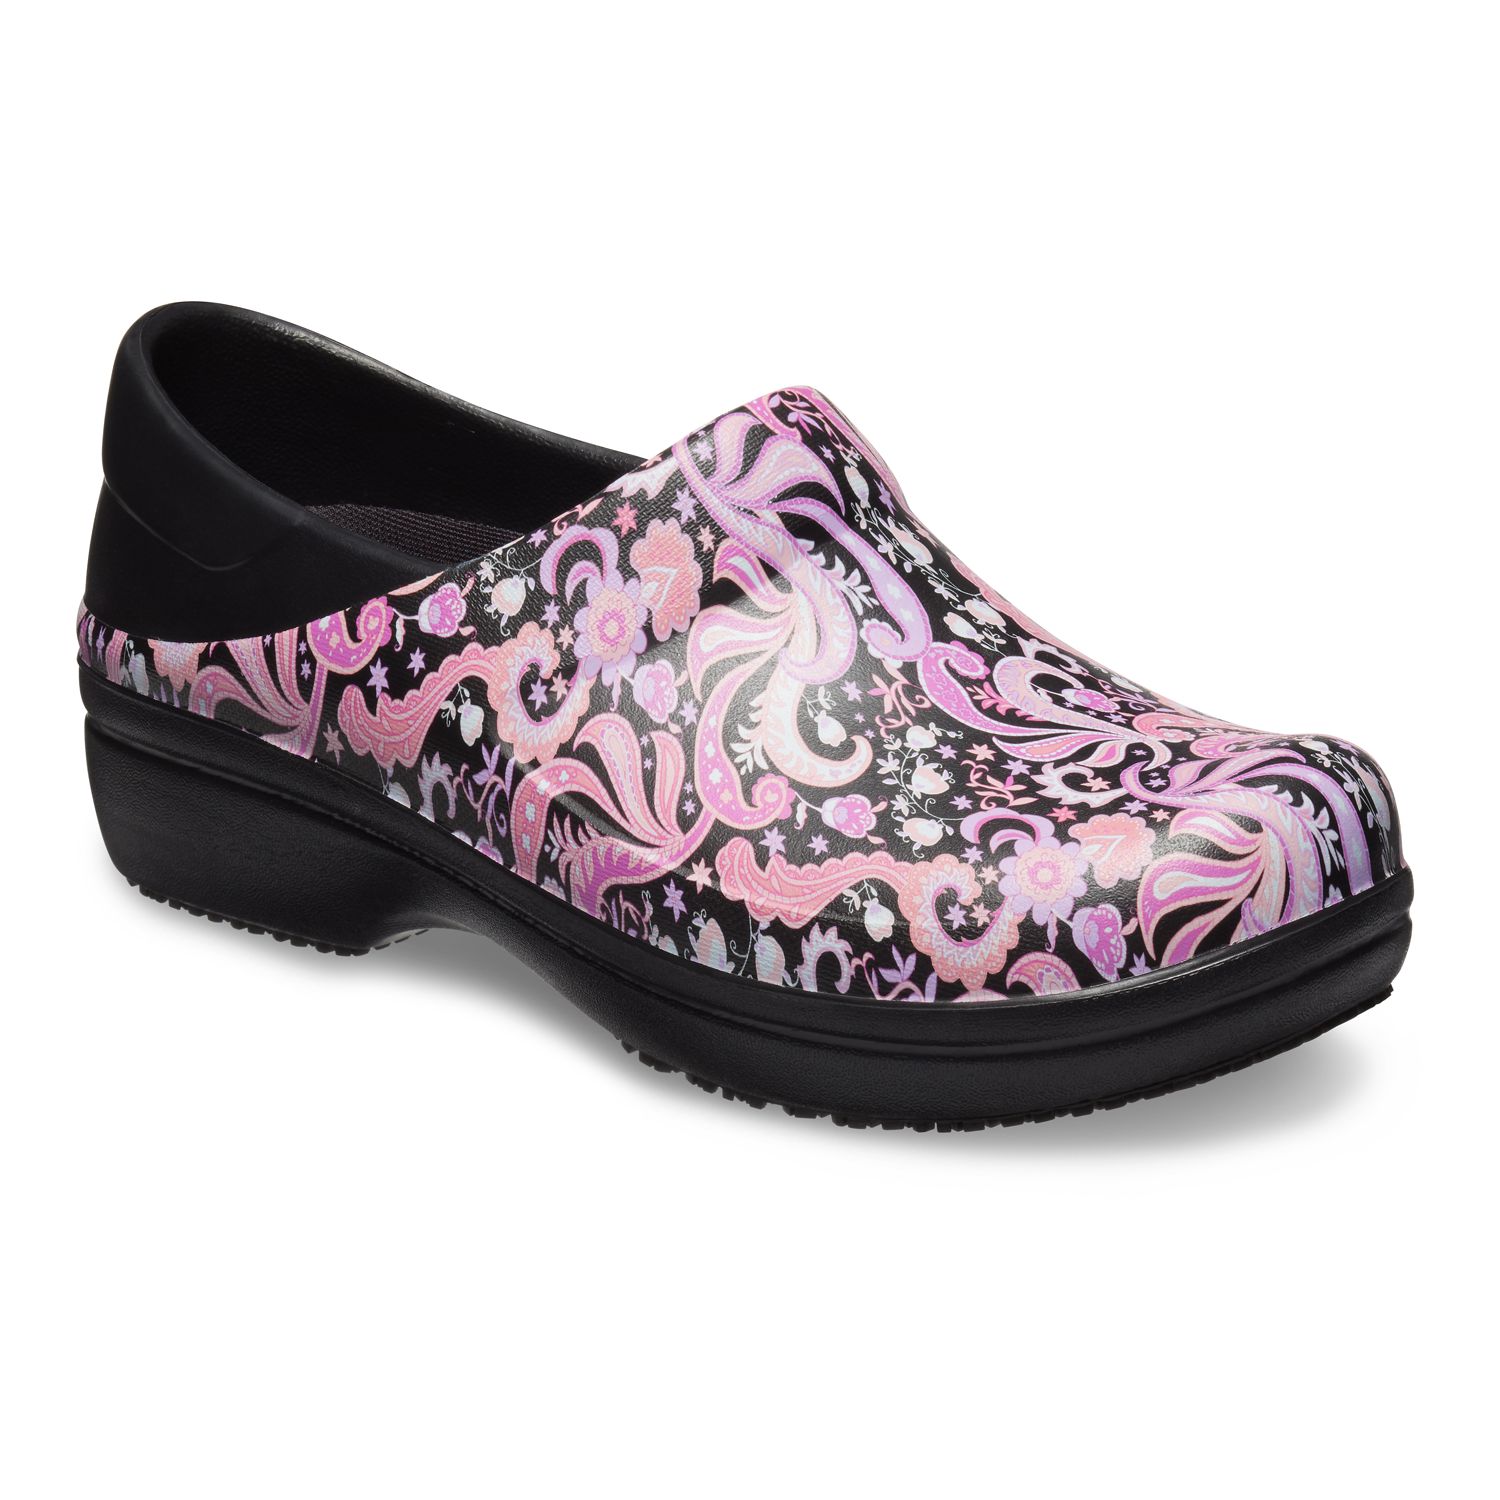 crocs neria pro ii women's work shoes